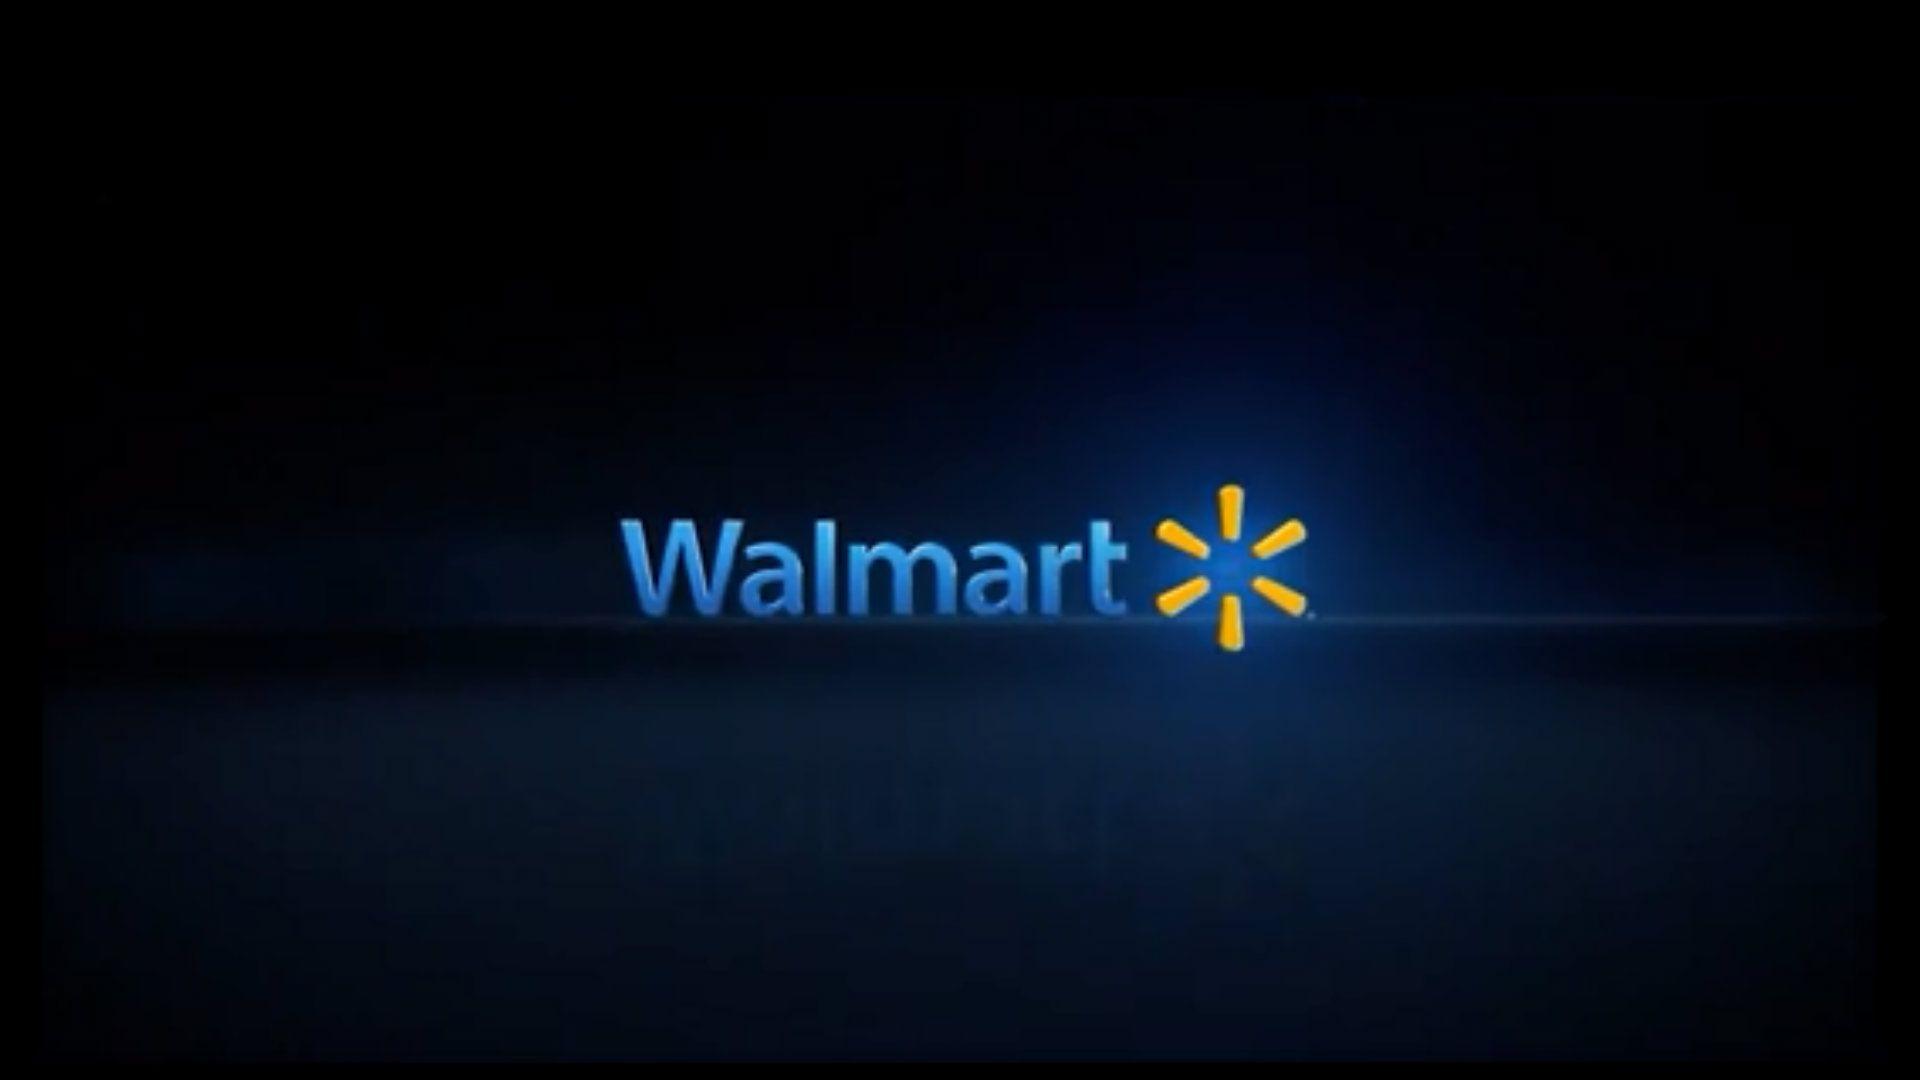 Fonds d&Walmart : tous les wallpapers Walmart